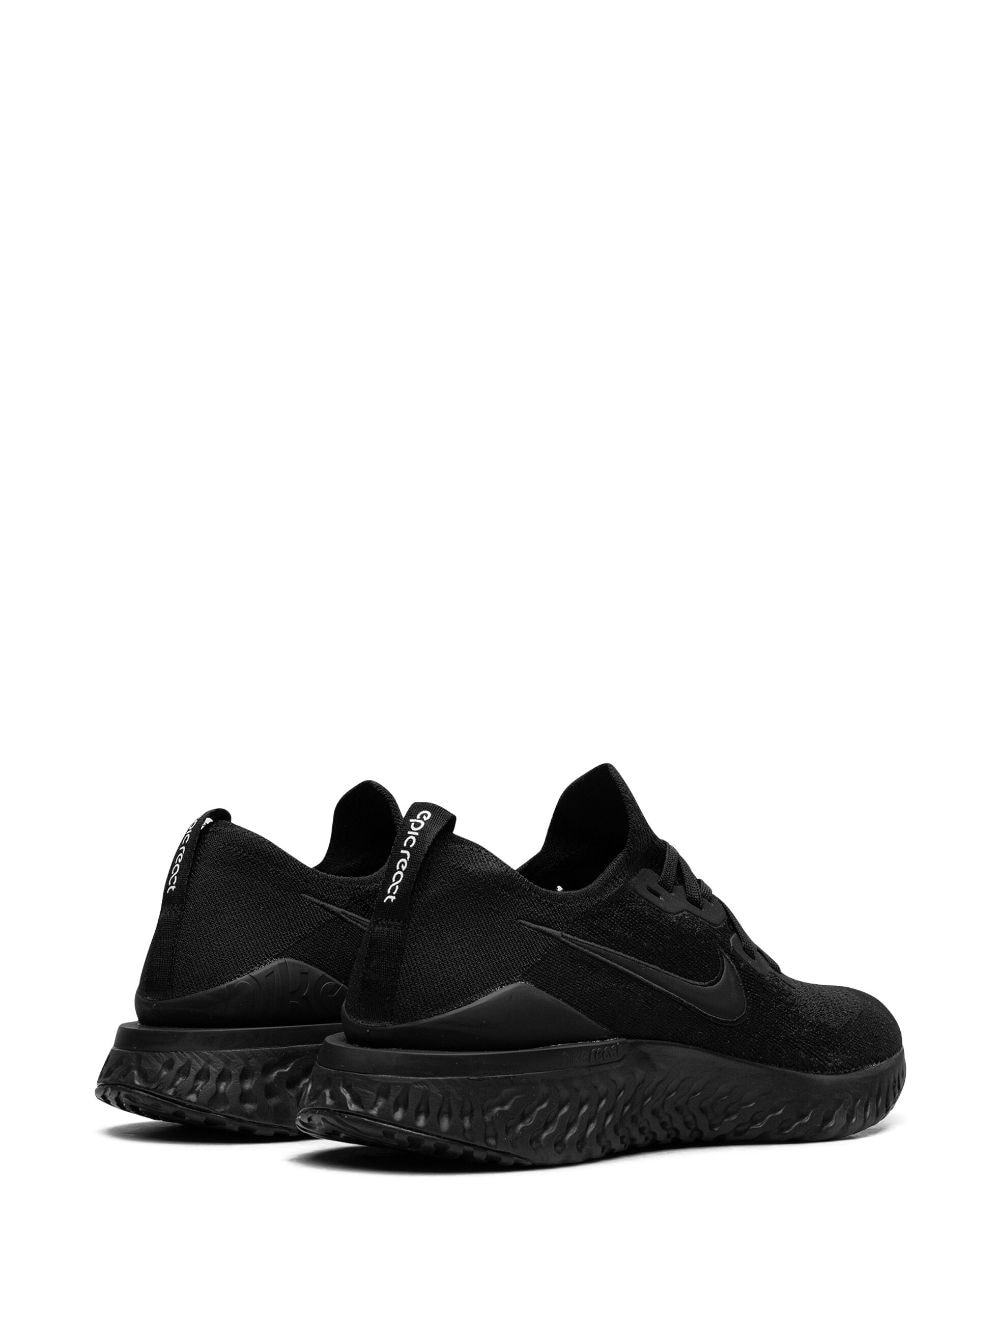 Nike Epic React Flyknit 2 sneakers Black